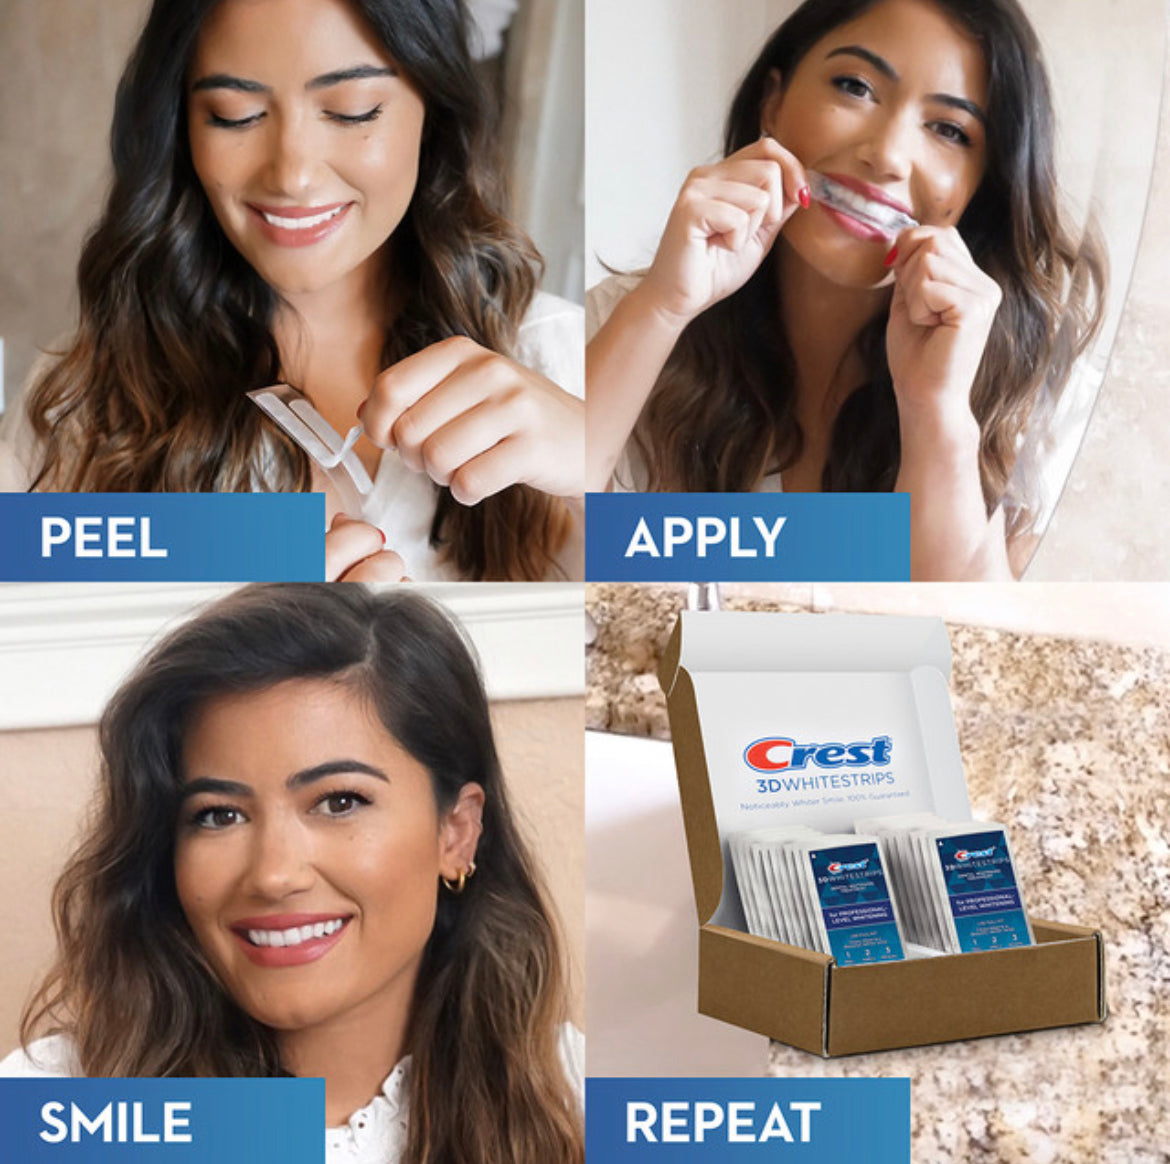 Crest 3DWhitestrips Professional Effects Teeth Whitening Strips